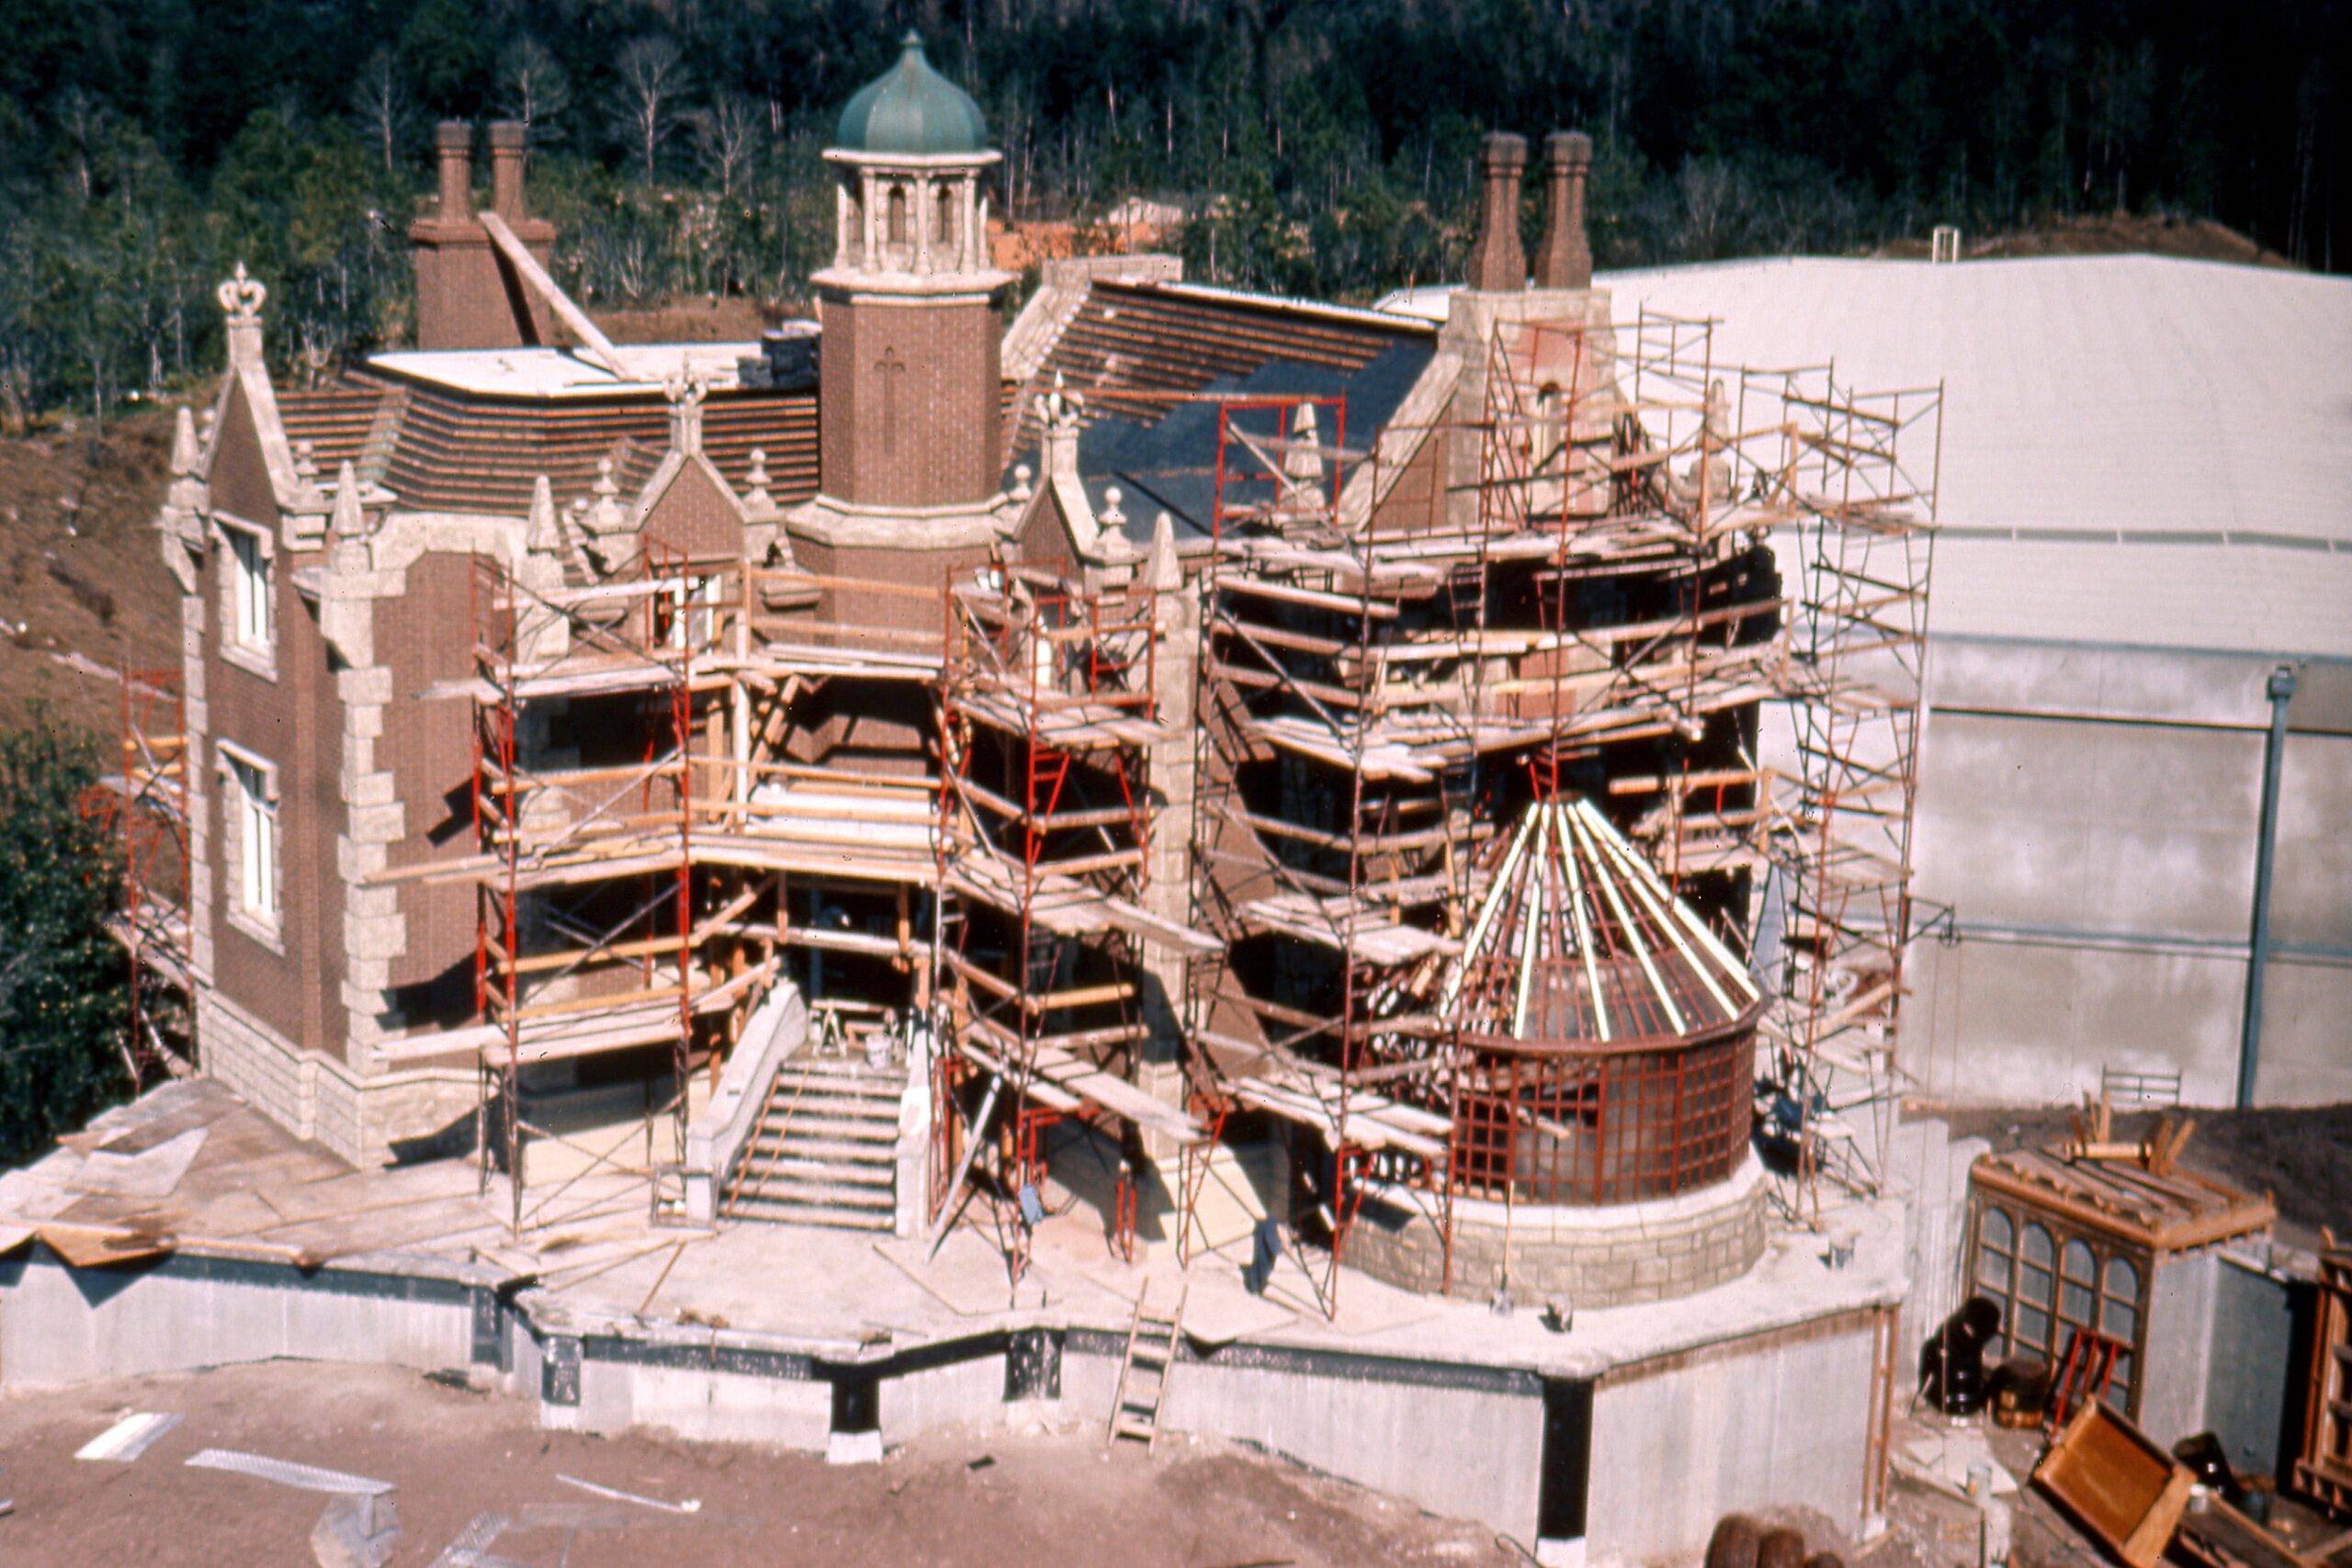 Haunted Mansion under construction at Magic Kingdom Park in 1971 at Walt Disney World Resort